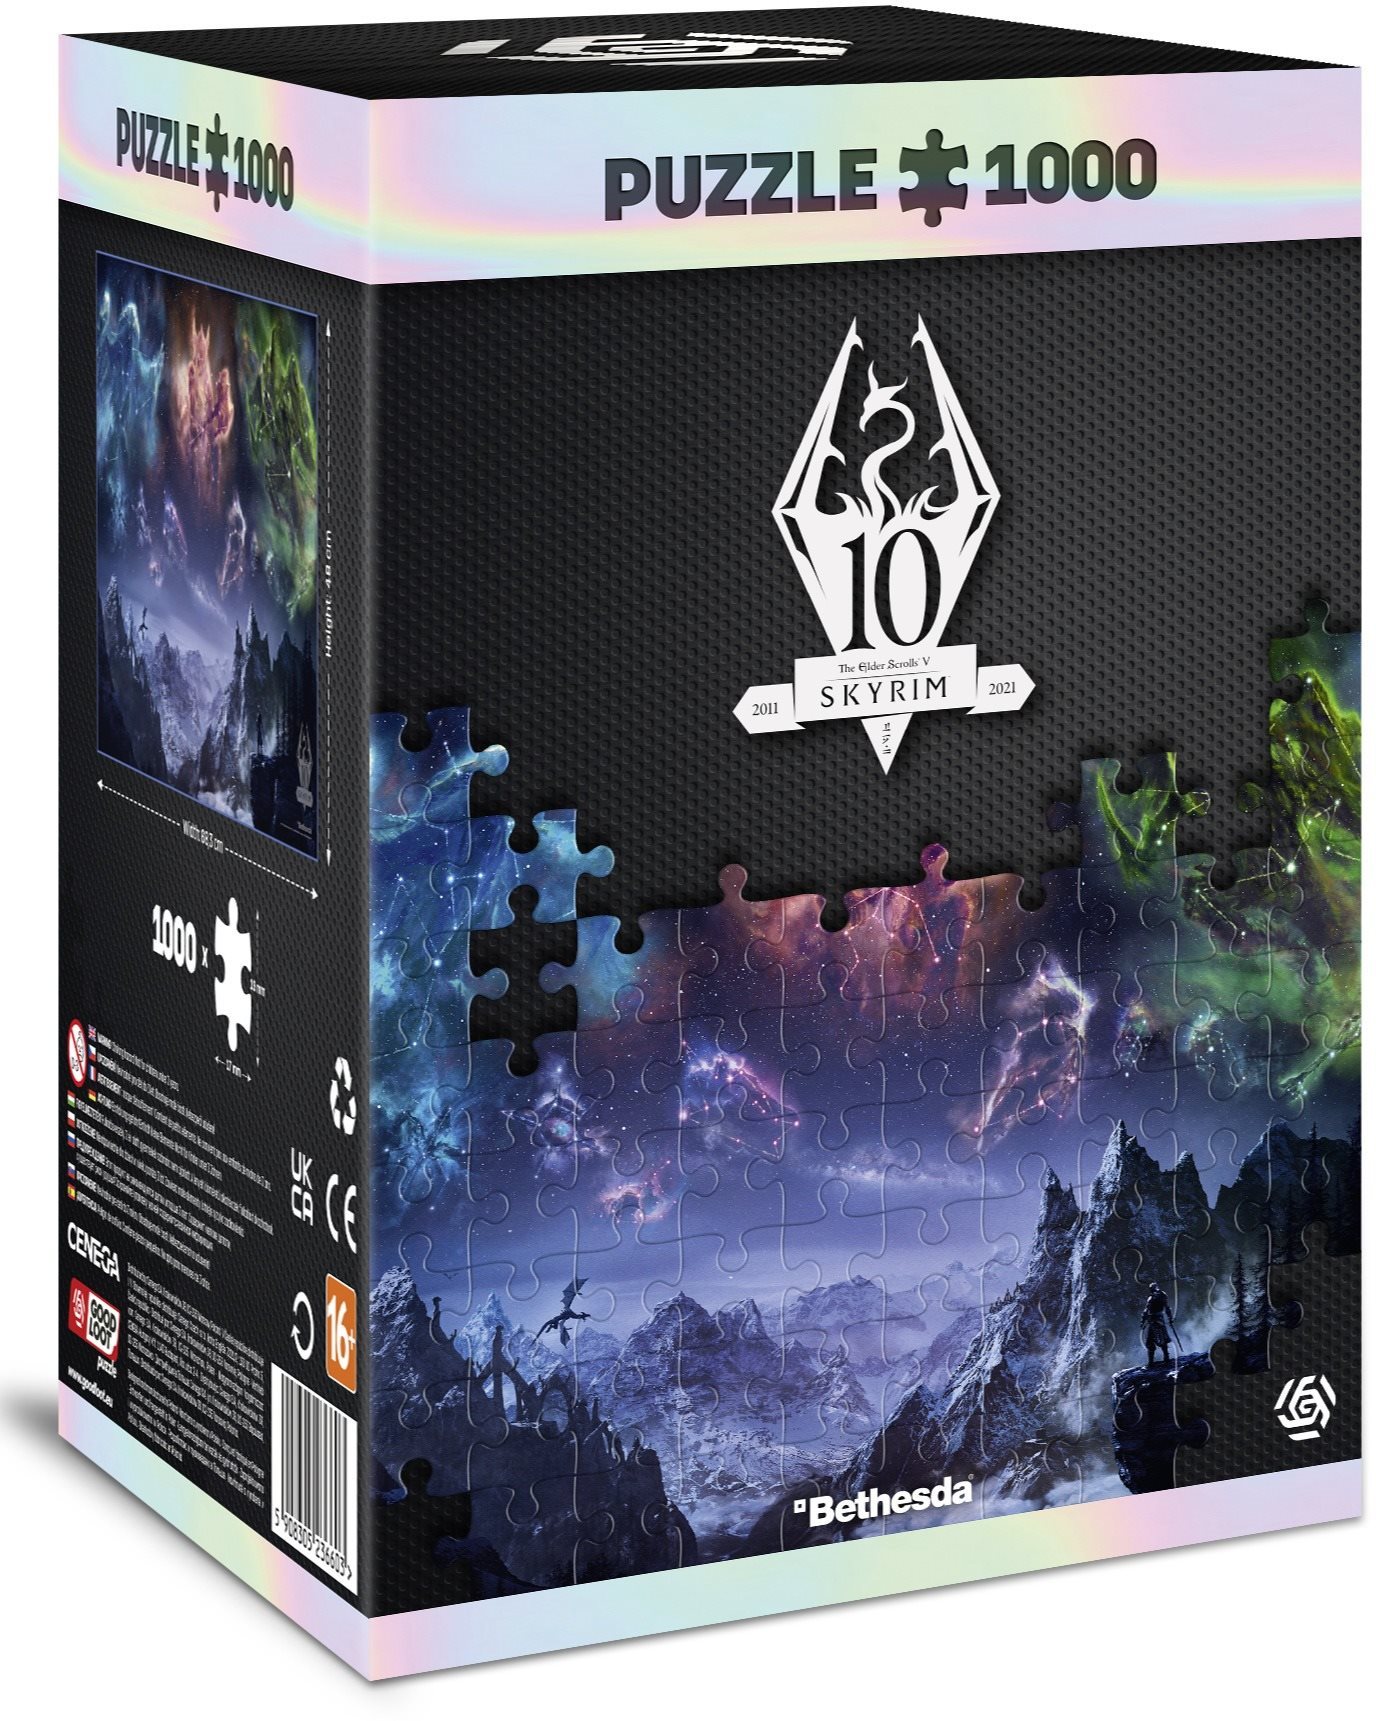 Skyrim 10th Anniversary - Puzzle